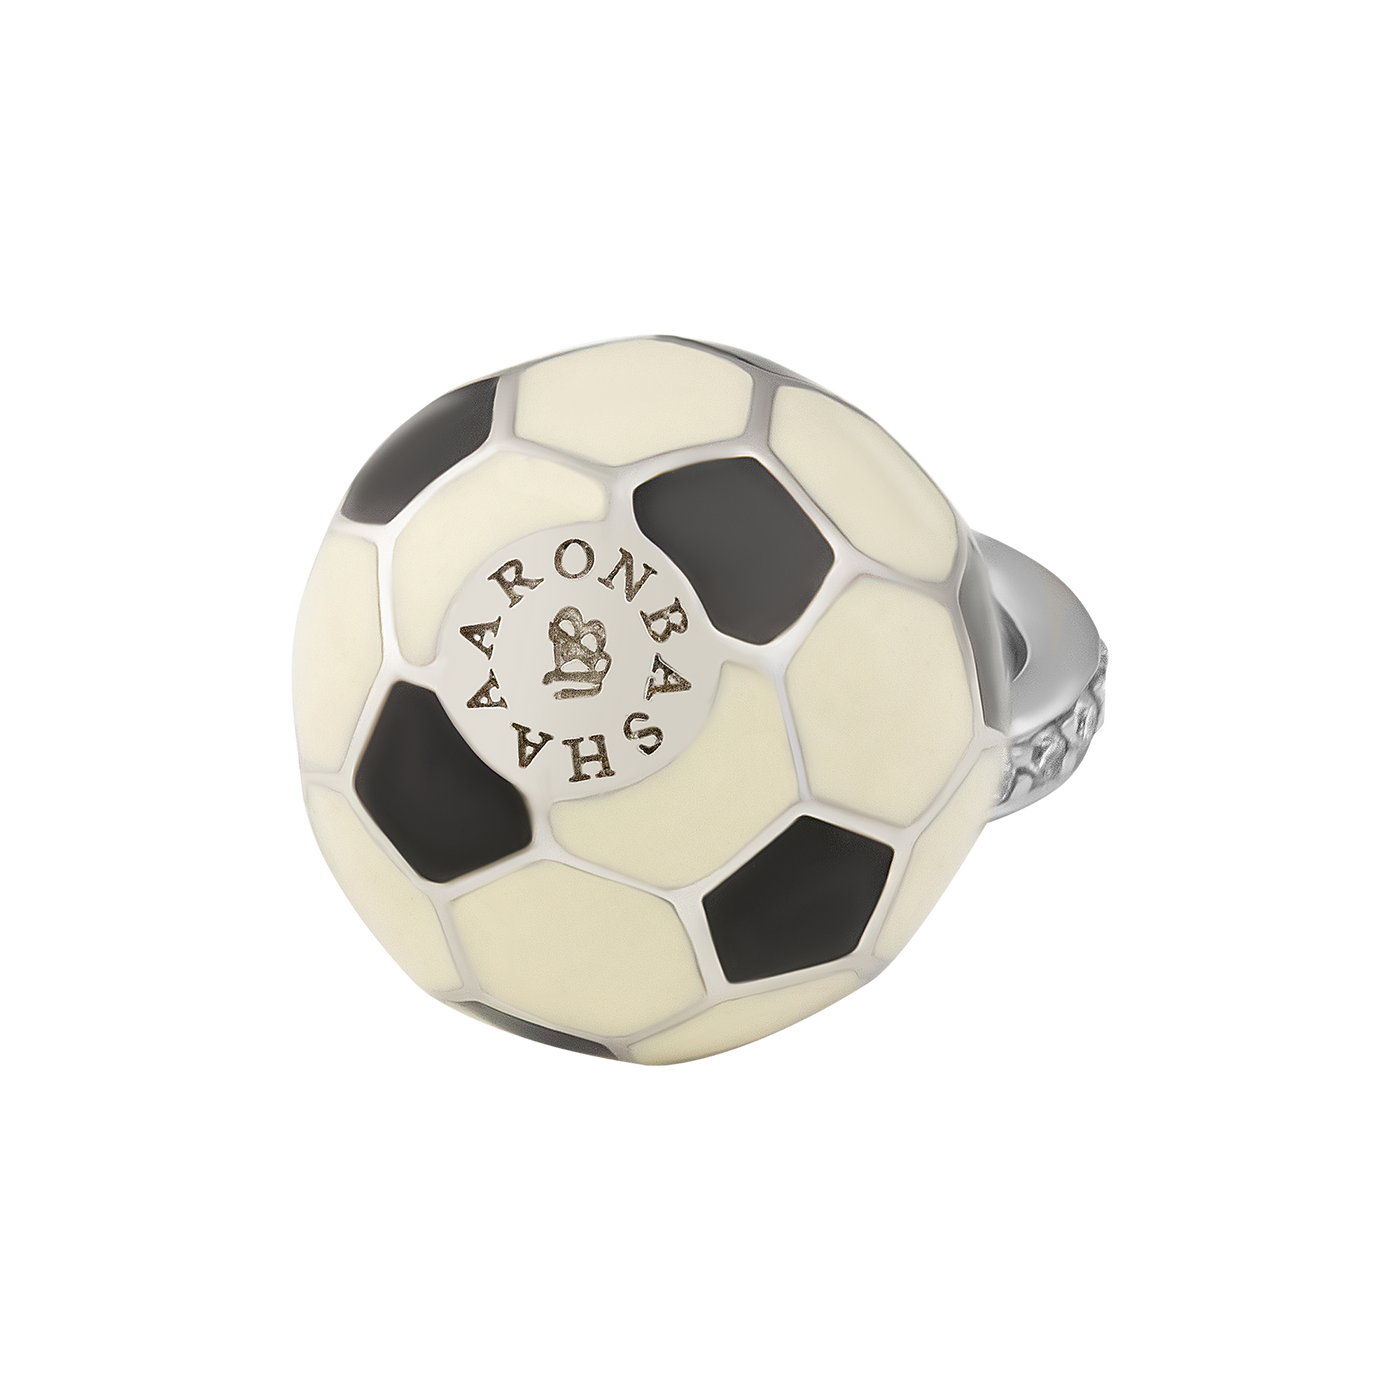 Aaron Basha 18K White Gold Diamond Soccer Ball Charm